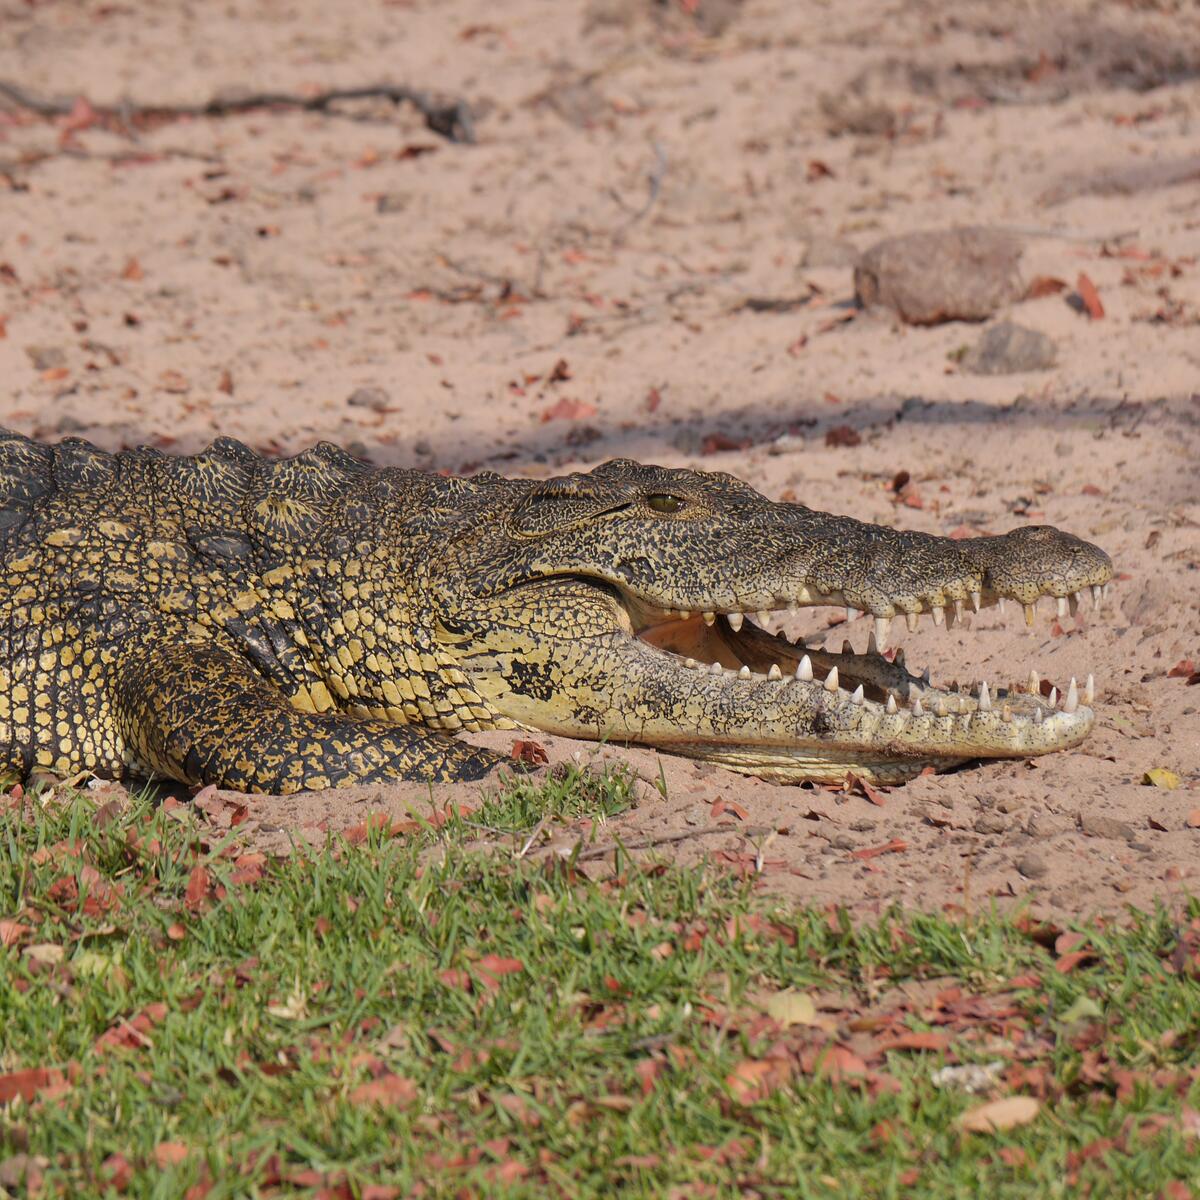 A terrifying crocodile lies on the sand